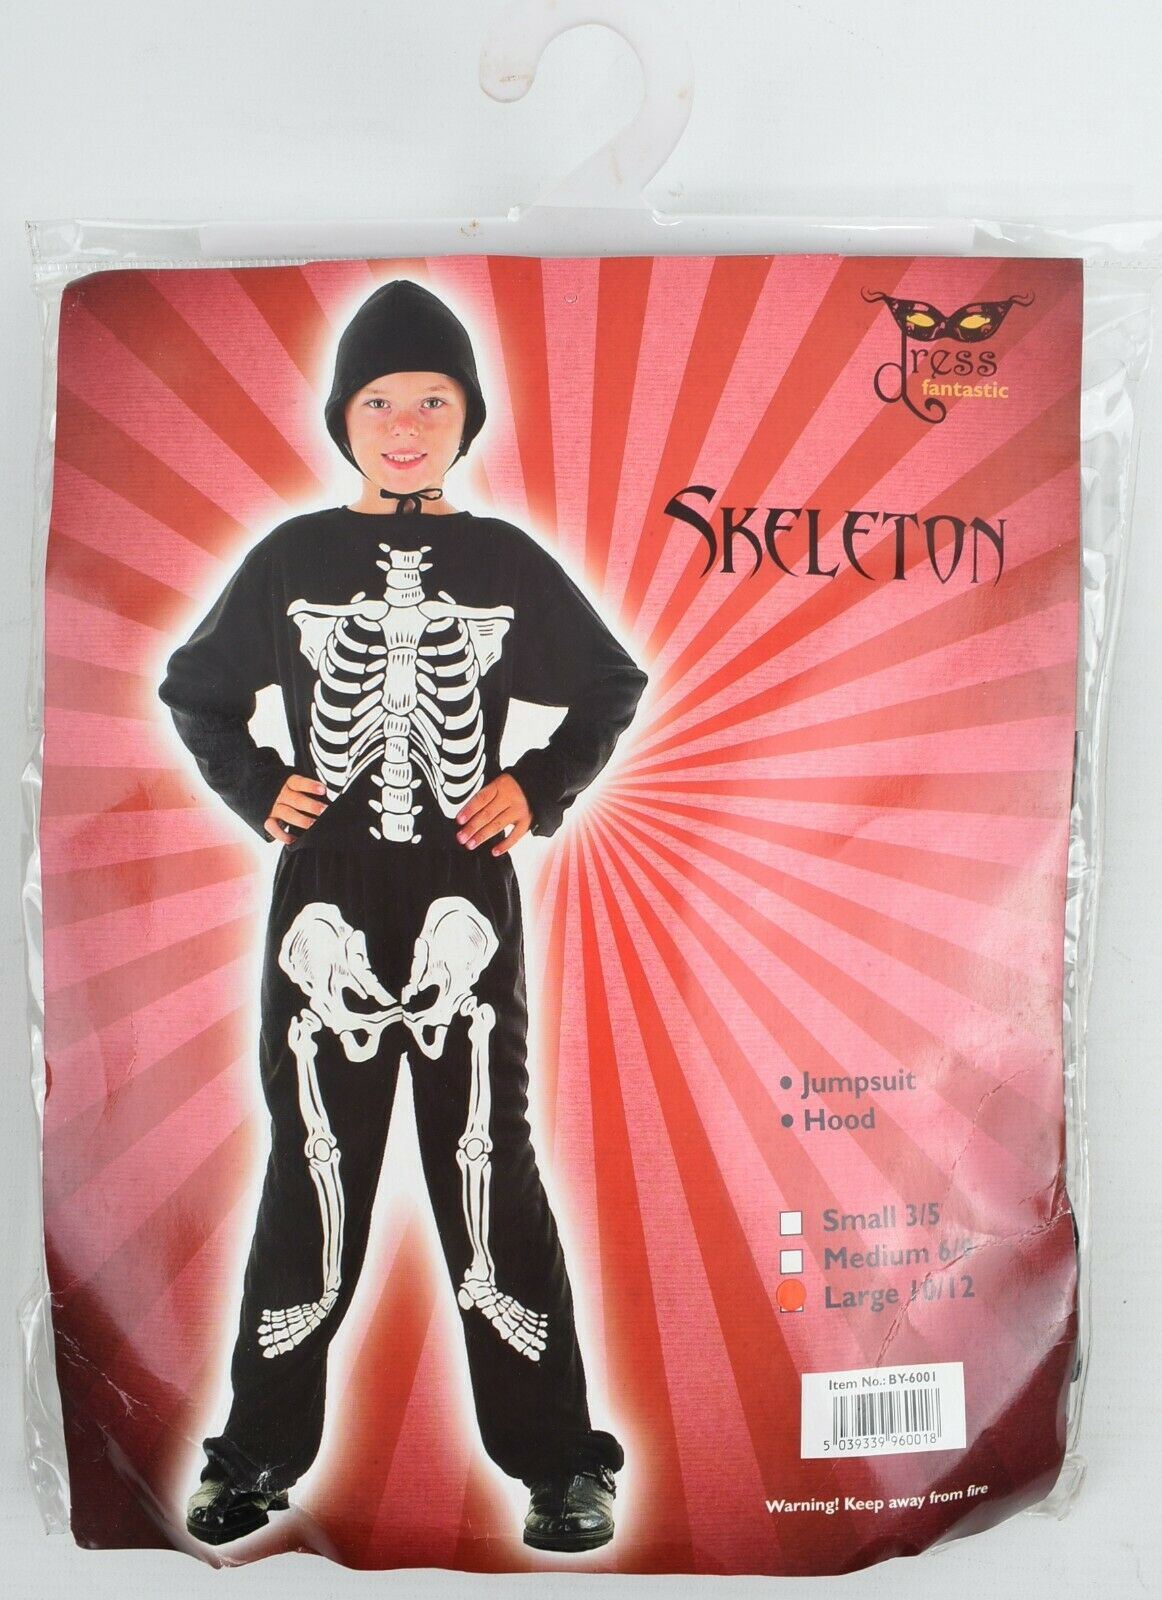 SKELETON Halloween Costume Boys' Kids' size 10-12 Years (by Dress Fantastic)